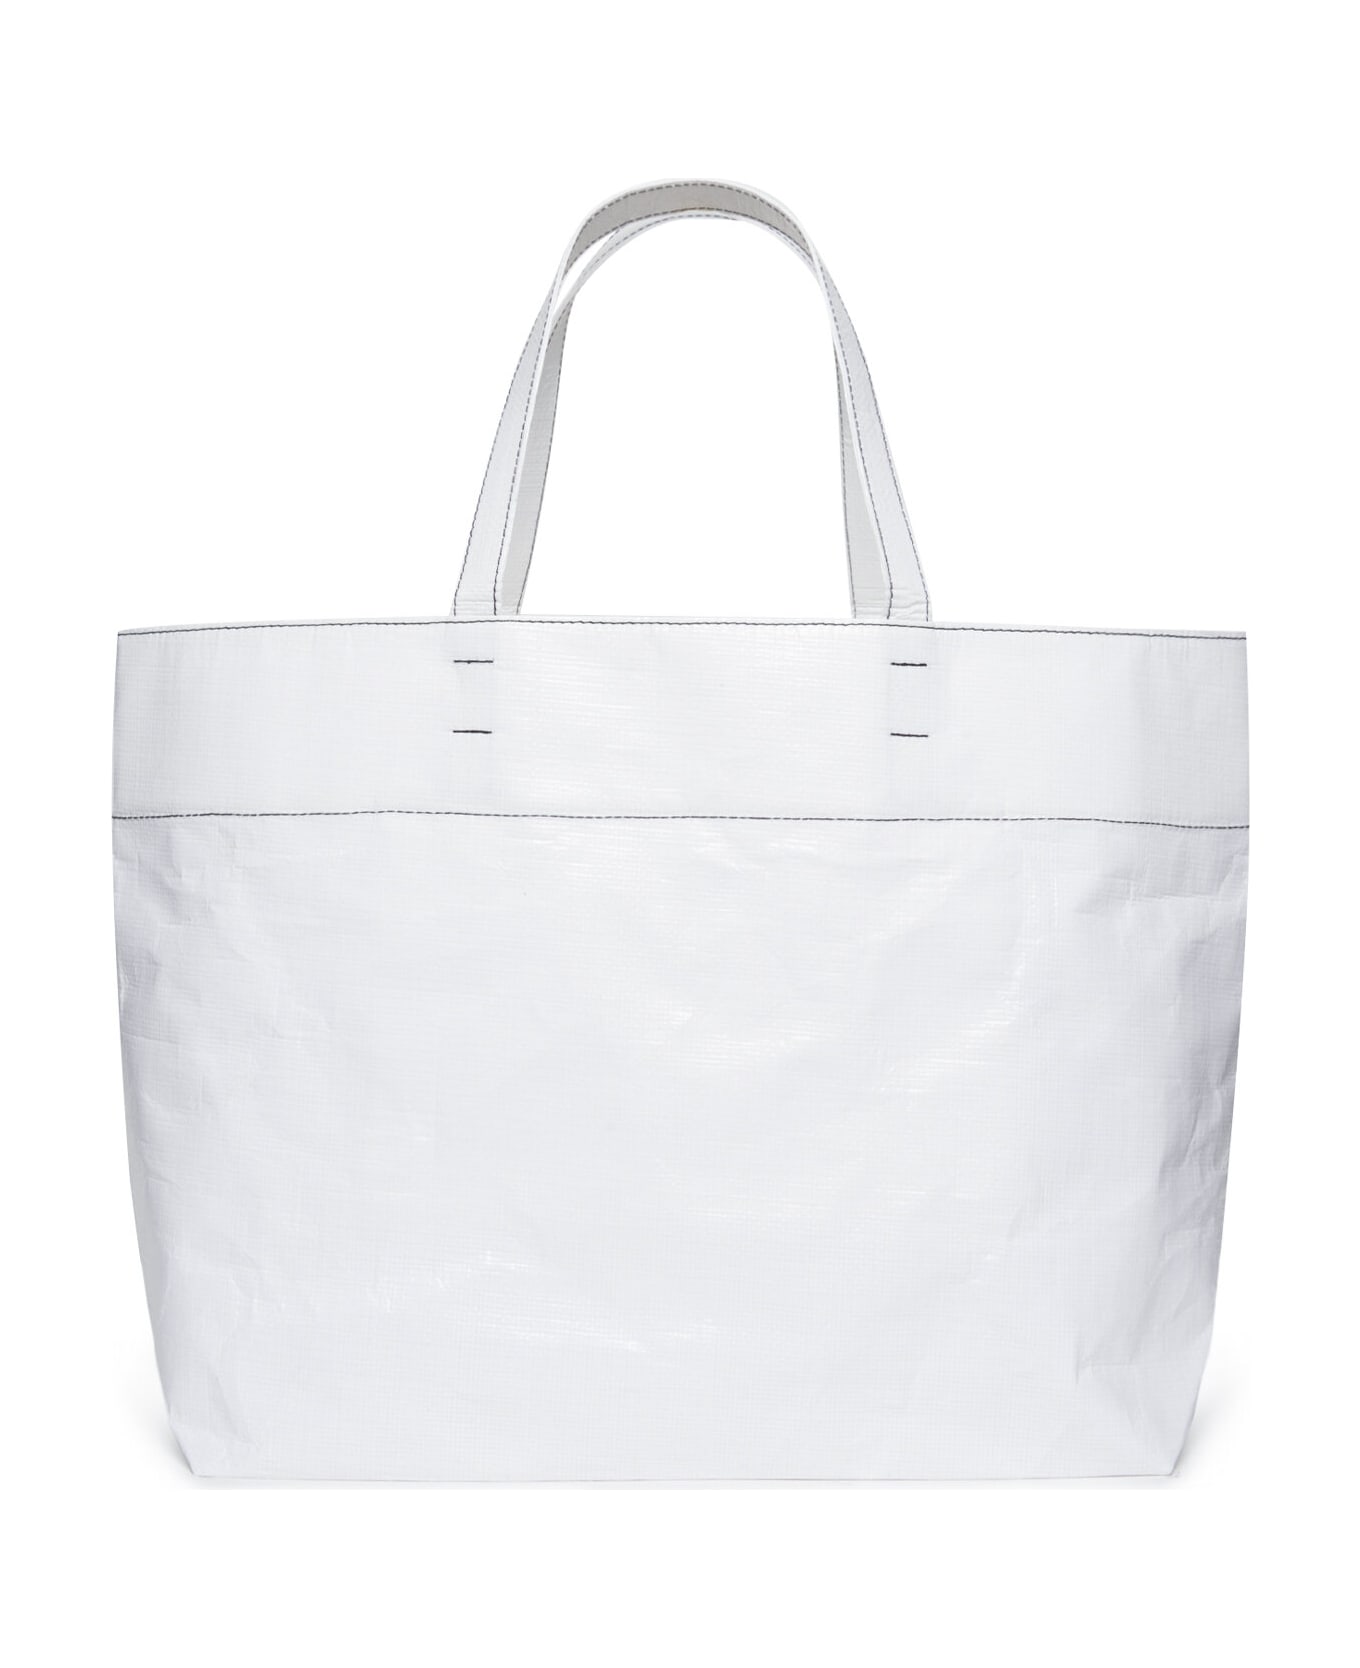 N.21 N21w23u Bags N°21 White Shopper Bag With Institutional Logo - Bianco アクセサリー＆ギフト